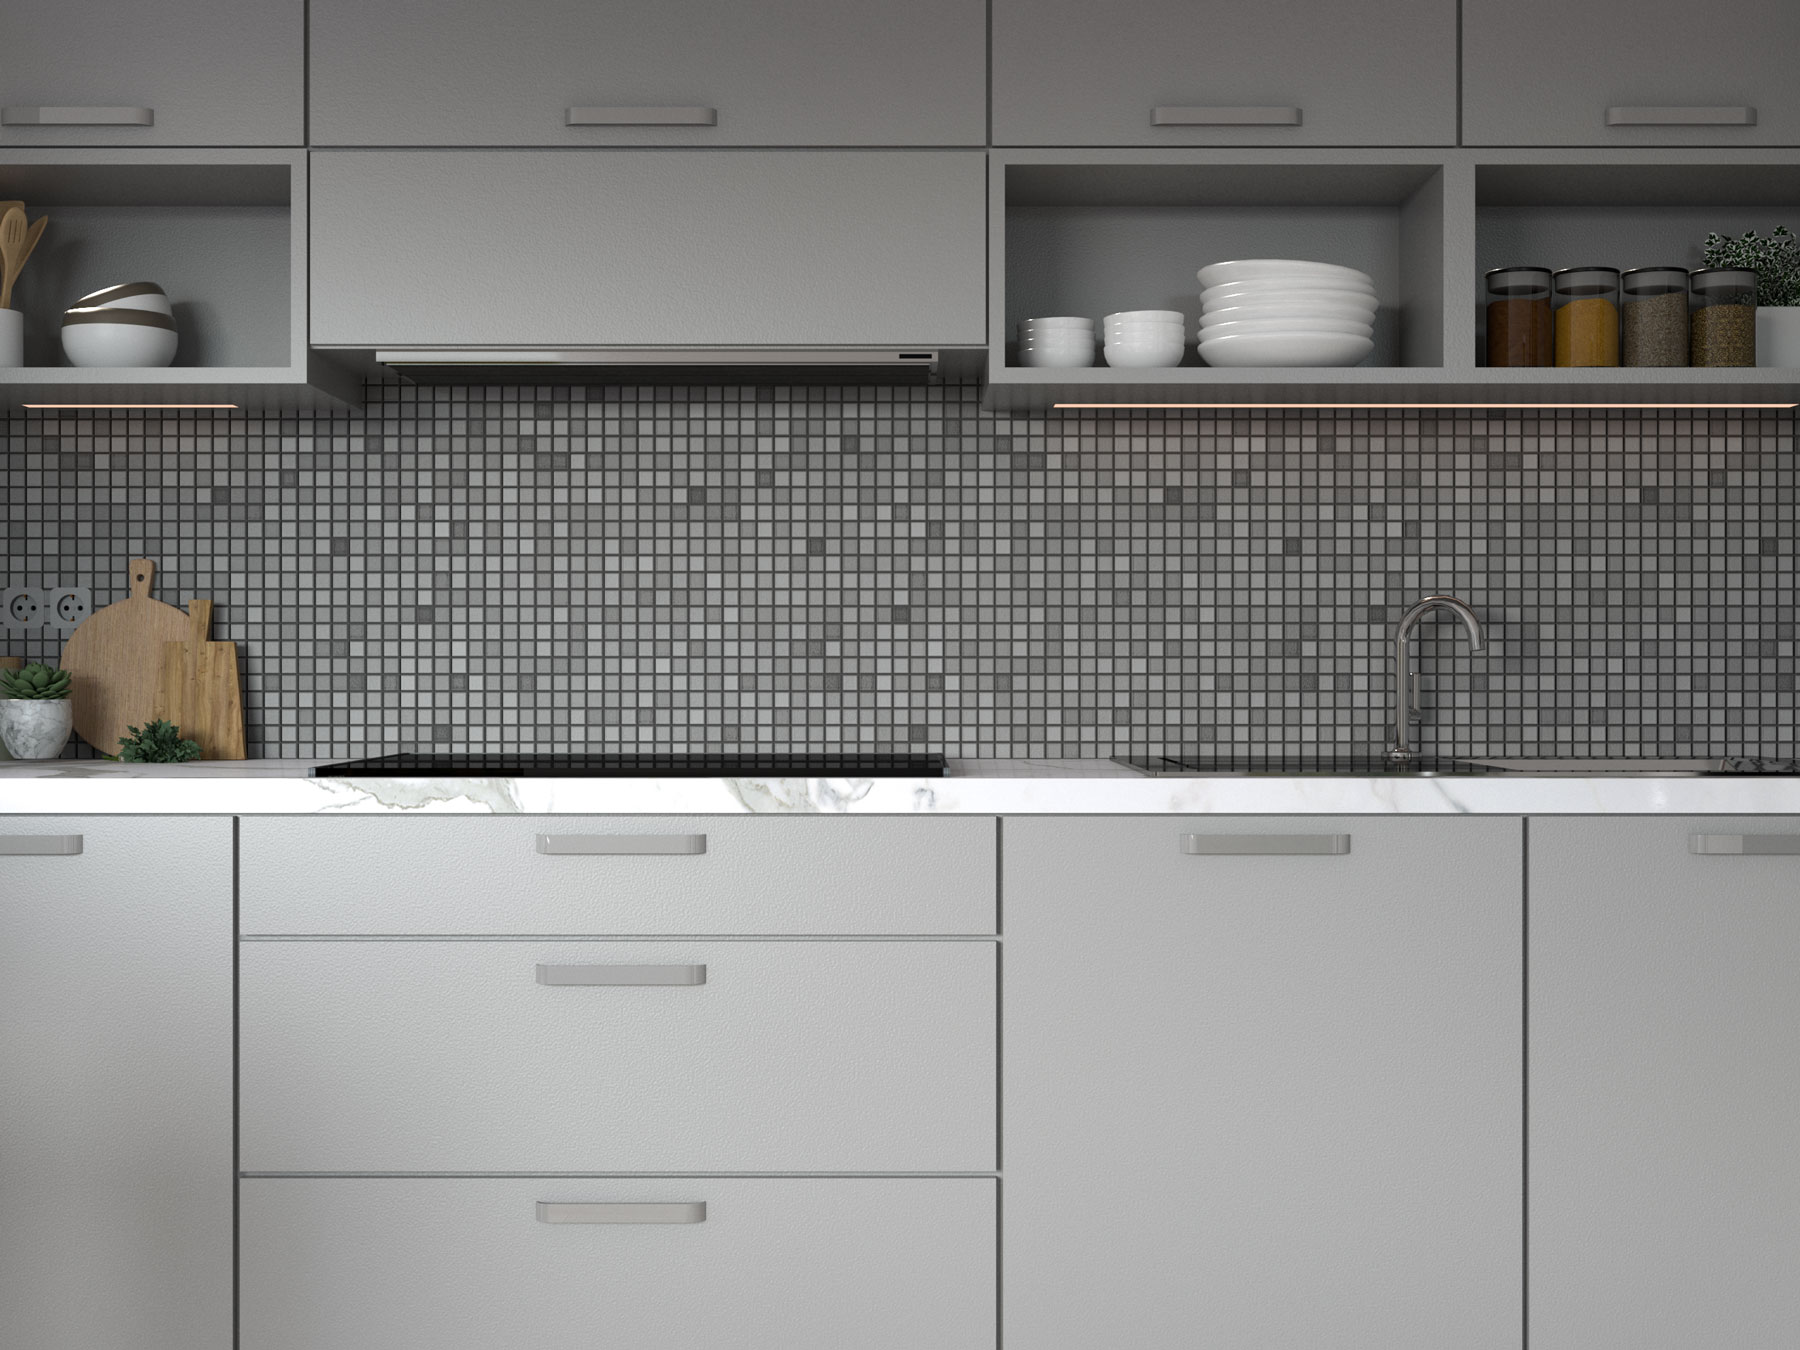 Kitchen with calacatta quartz countertops and gray mosaic tile backsplash